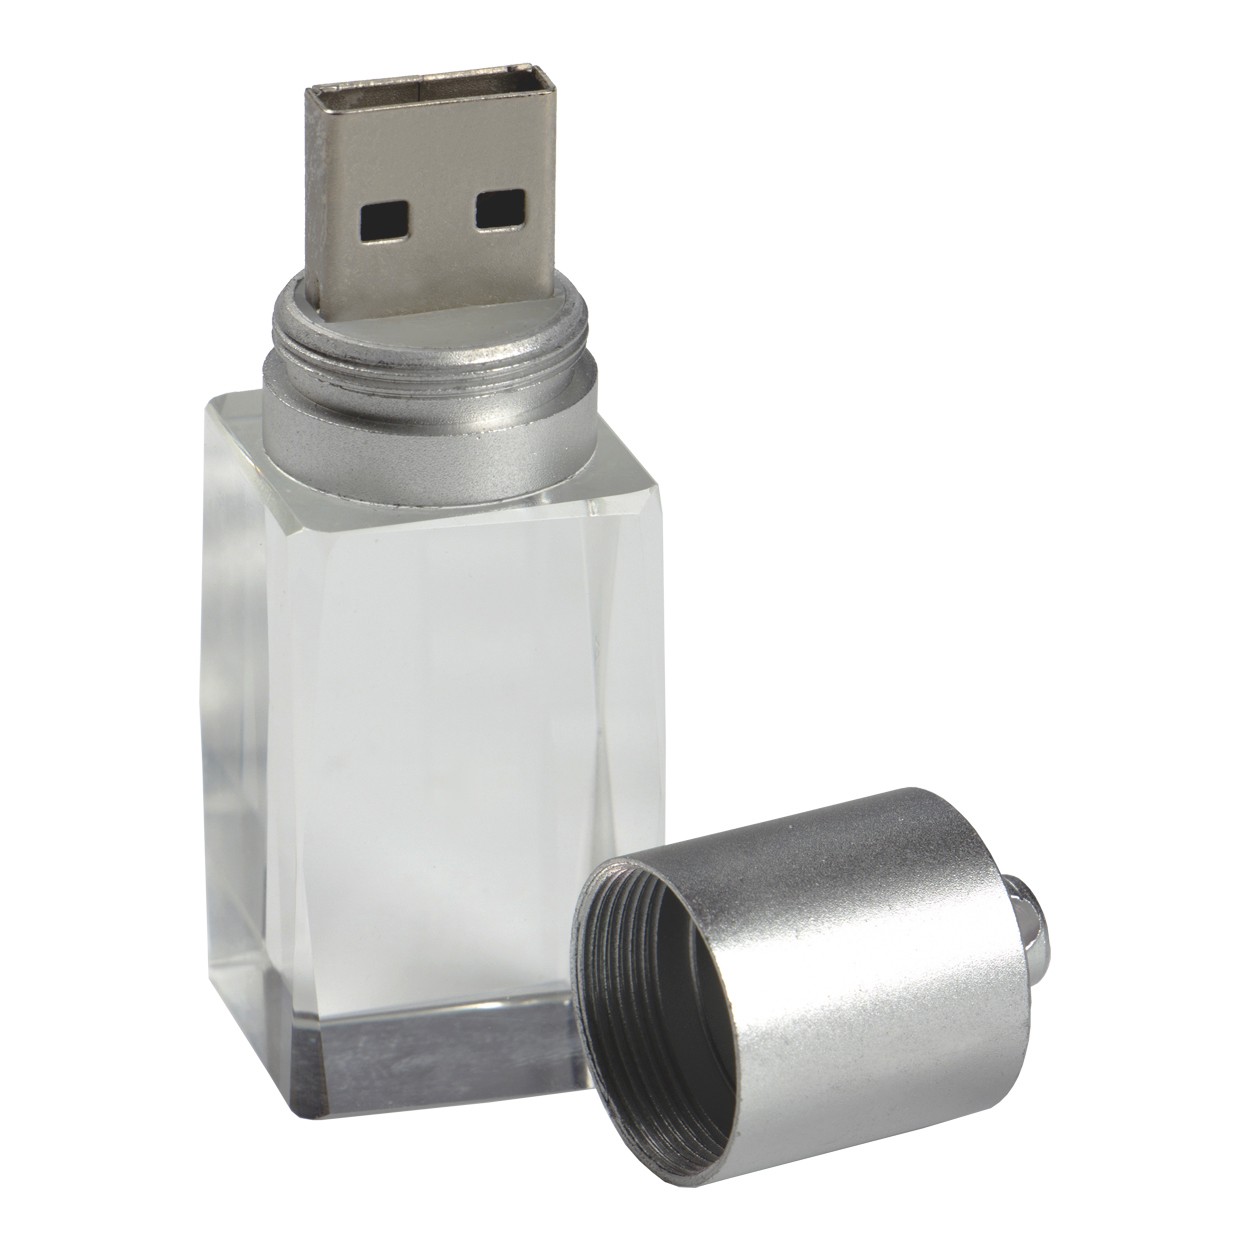 USB флешка модель 332 Matt